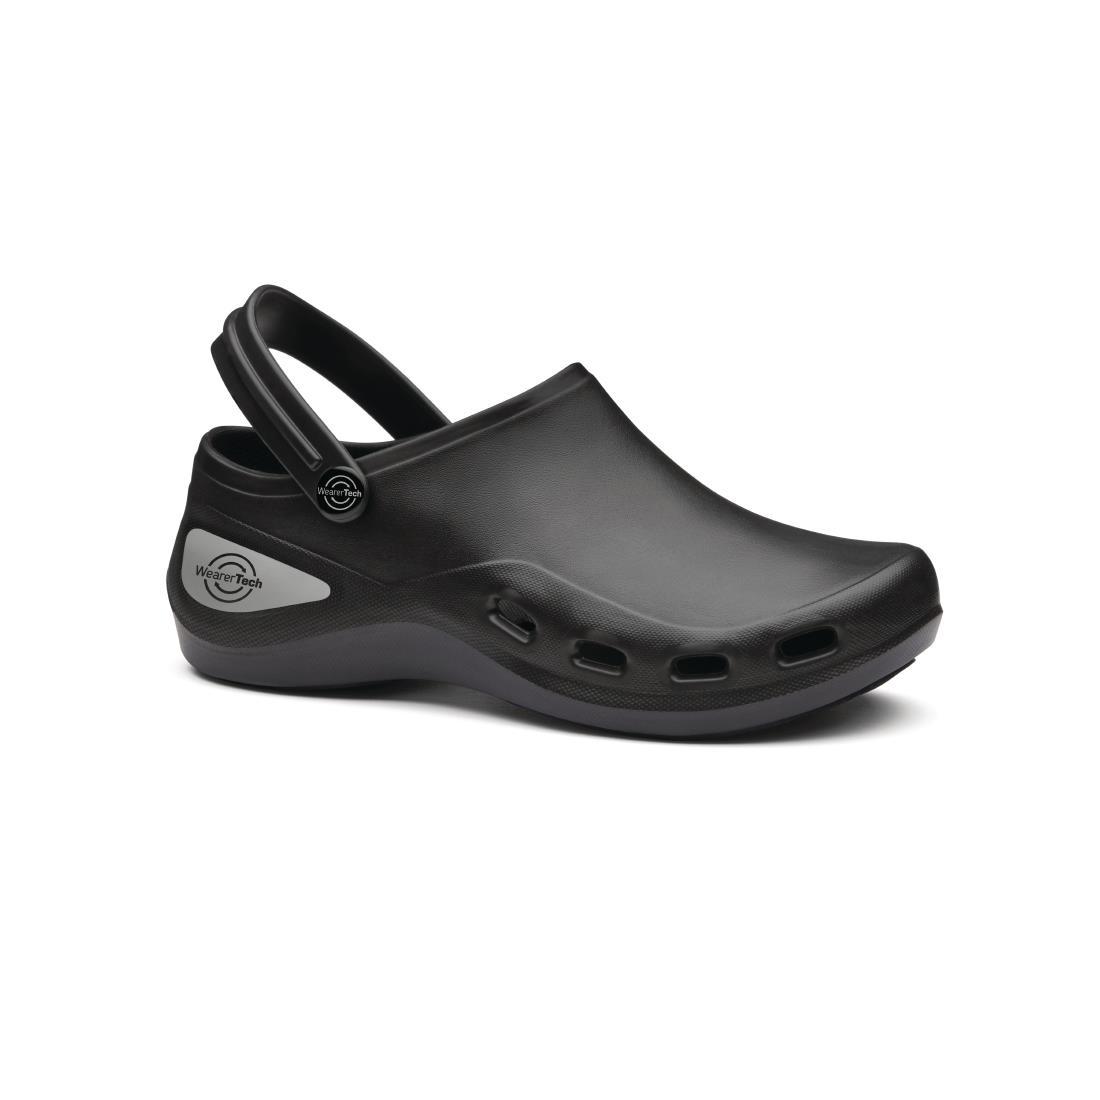 WearerTech Unisex Invigorate Black Safety Shoe Size 6 - BB195-39.5  - 6